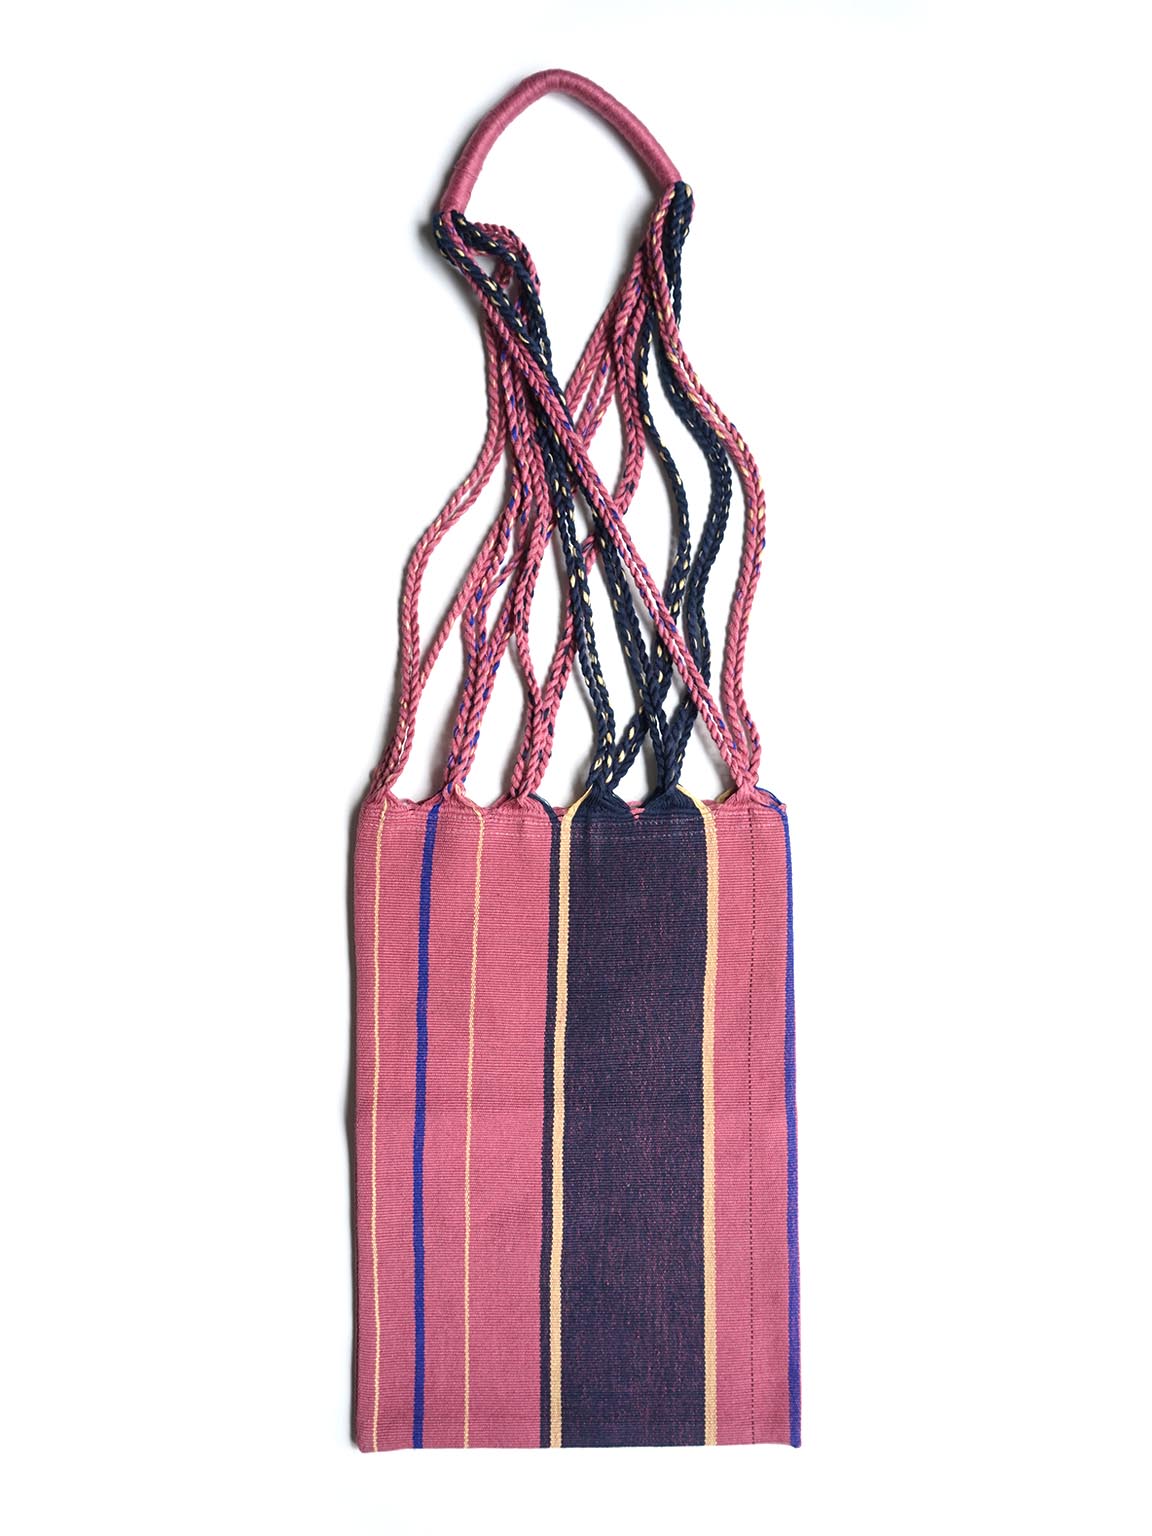 pips / mini hammock bag "PINK"